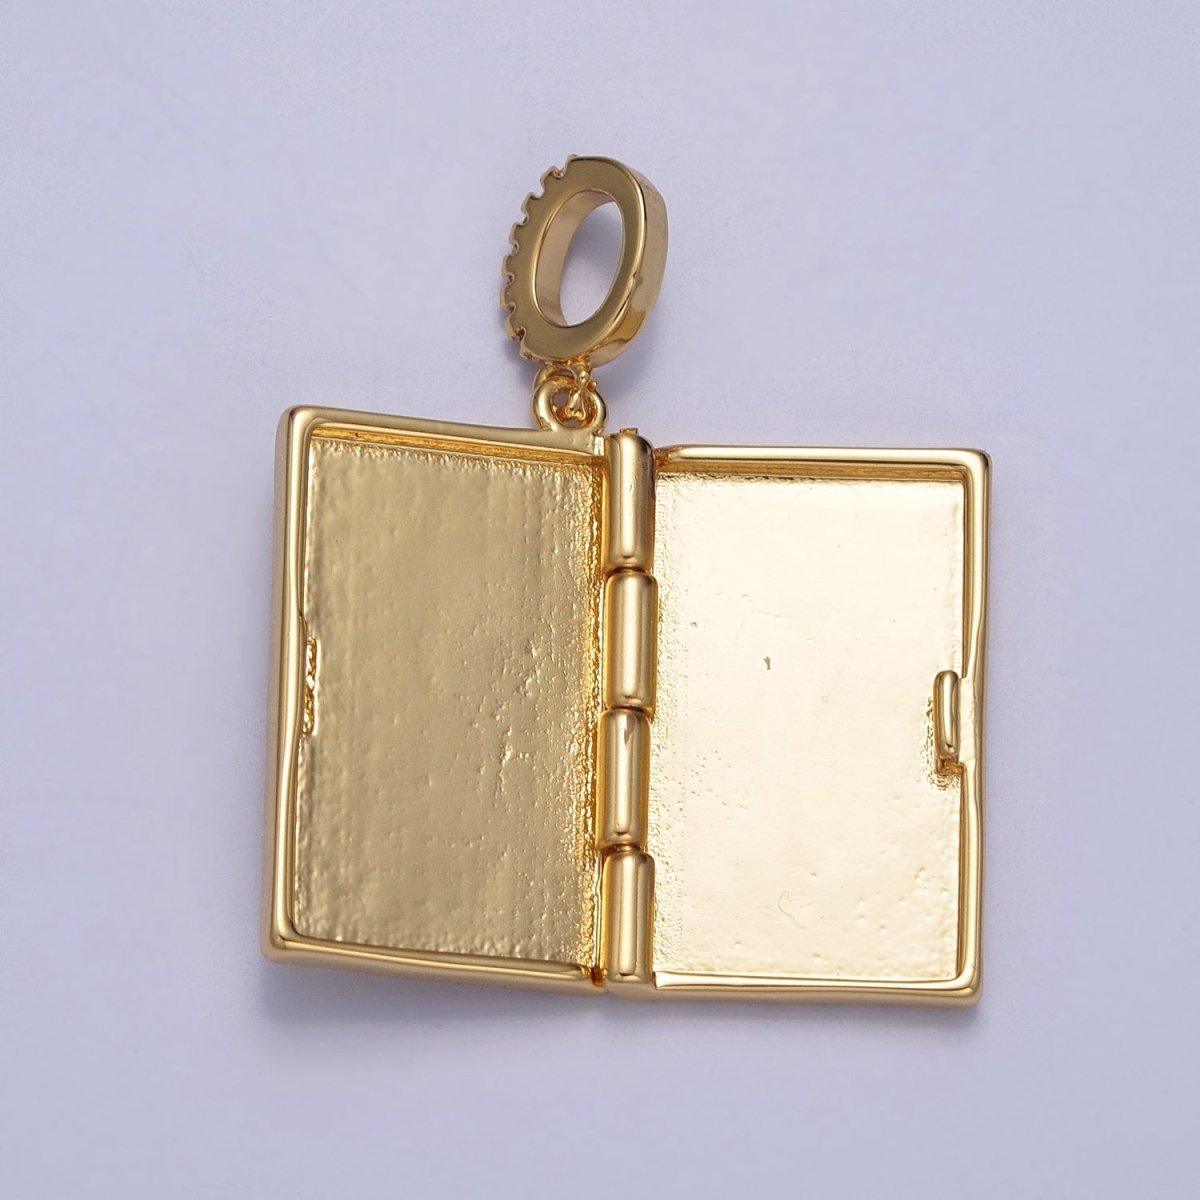 Dangle Book Locket Pendant Sun Burst Locket Charm Necklace 14K Gold Filled J-480 - DLUXCA